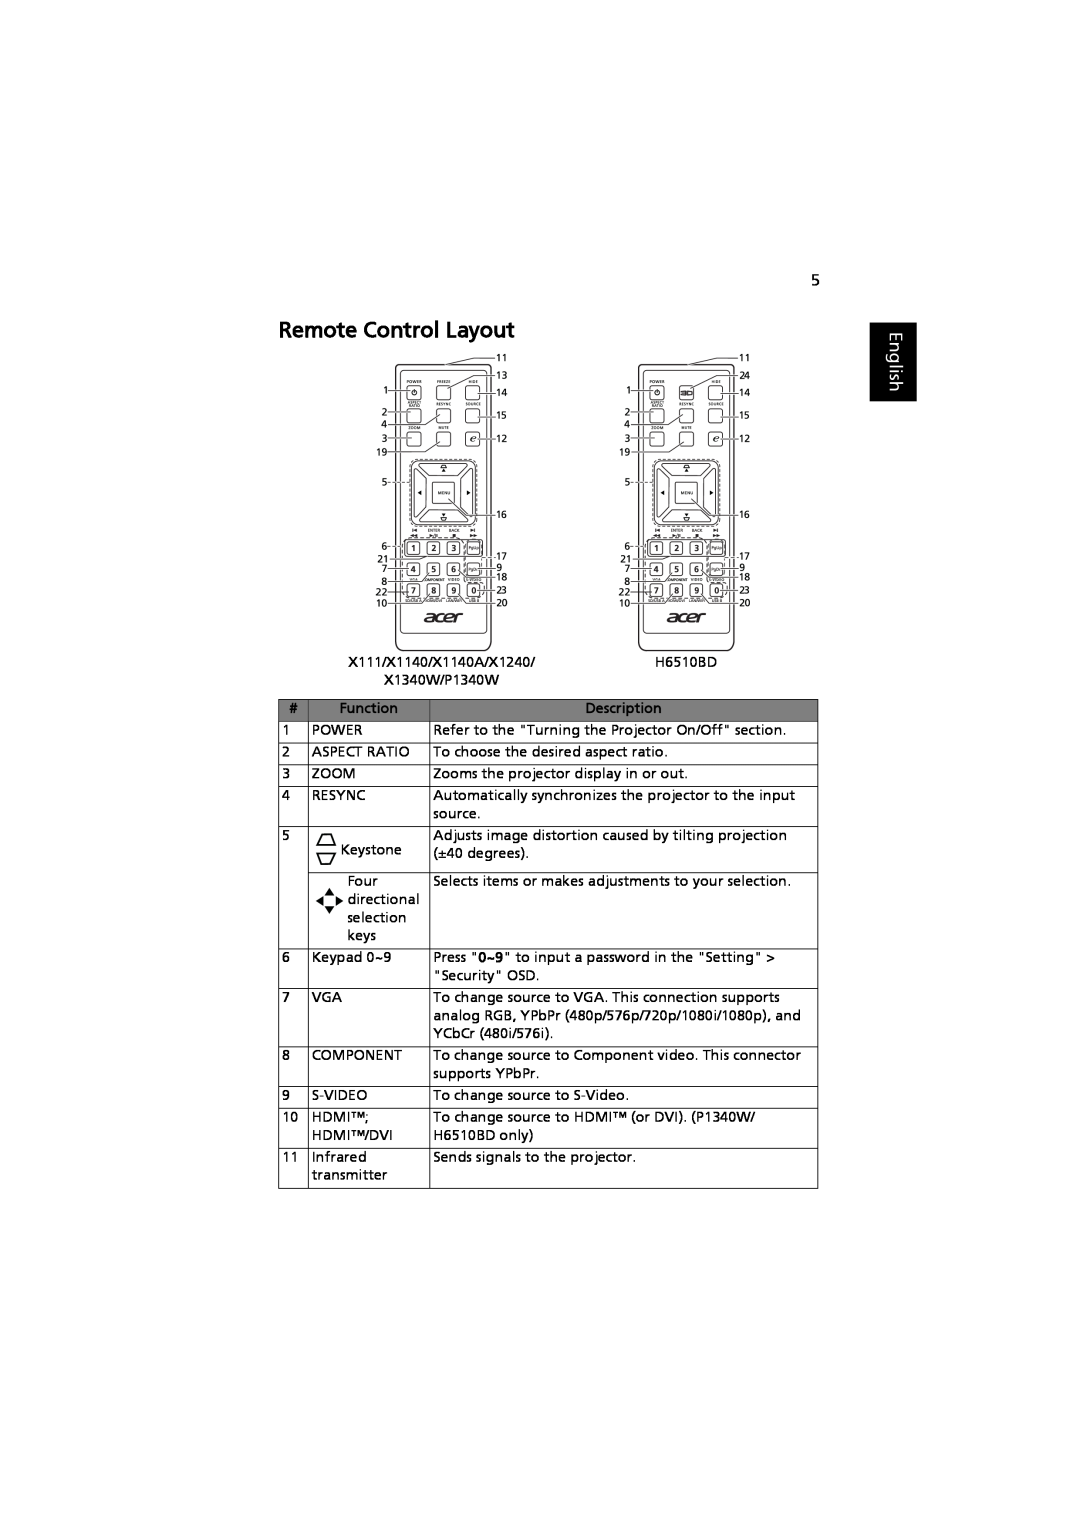 Acer MRJFZ1100A manual Remote Control Layout, English, Function, Description, X111/X1140/X1140A/X1240 